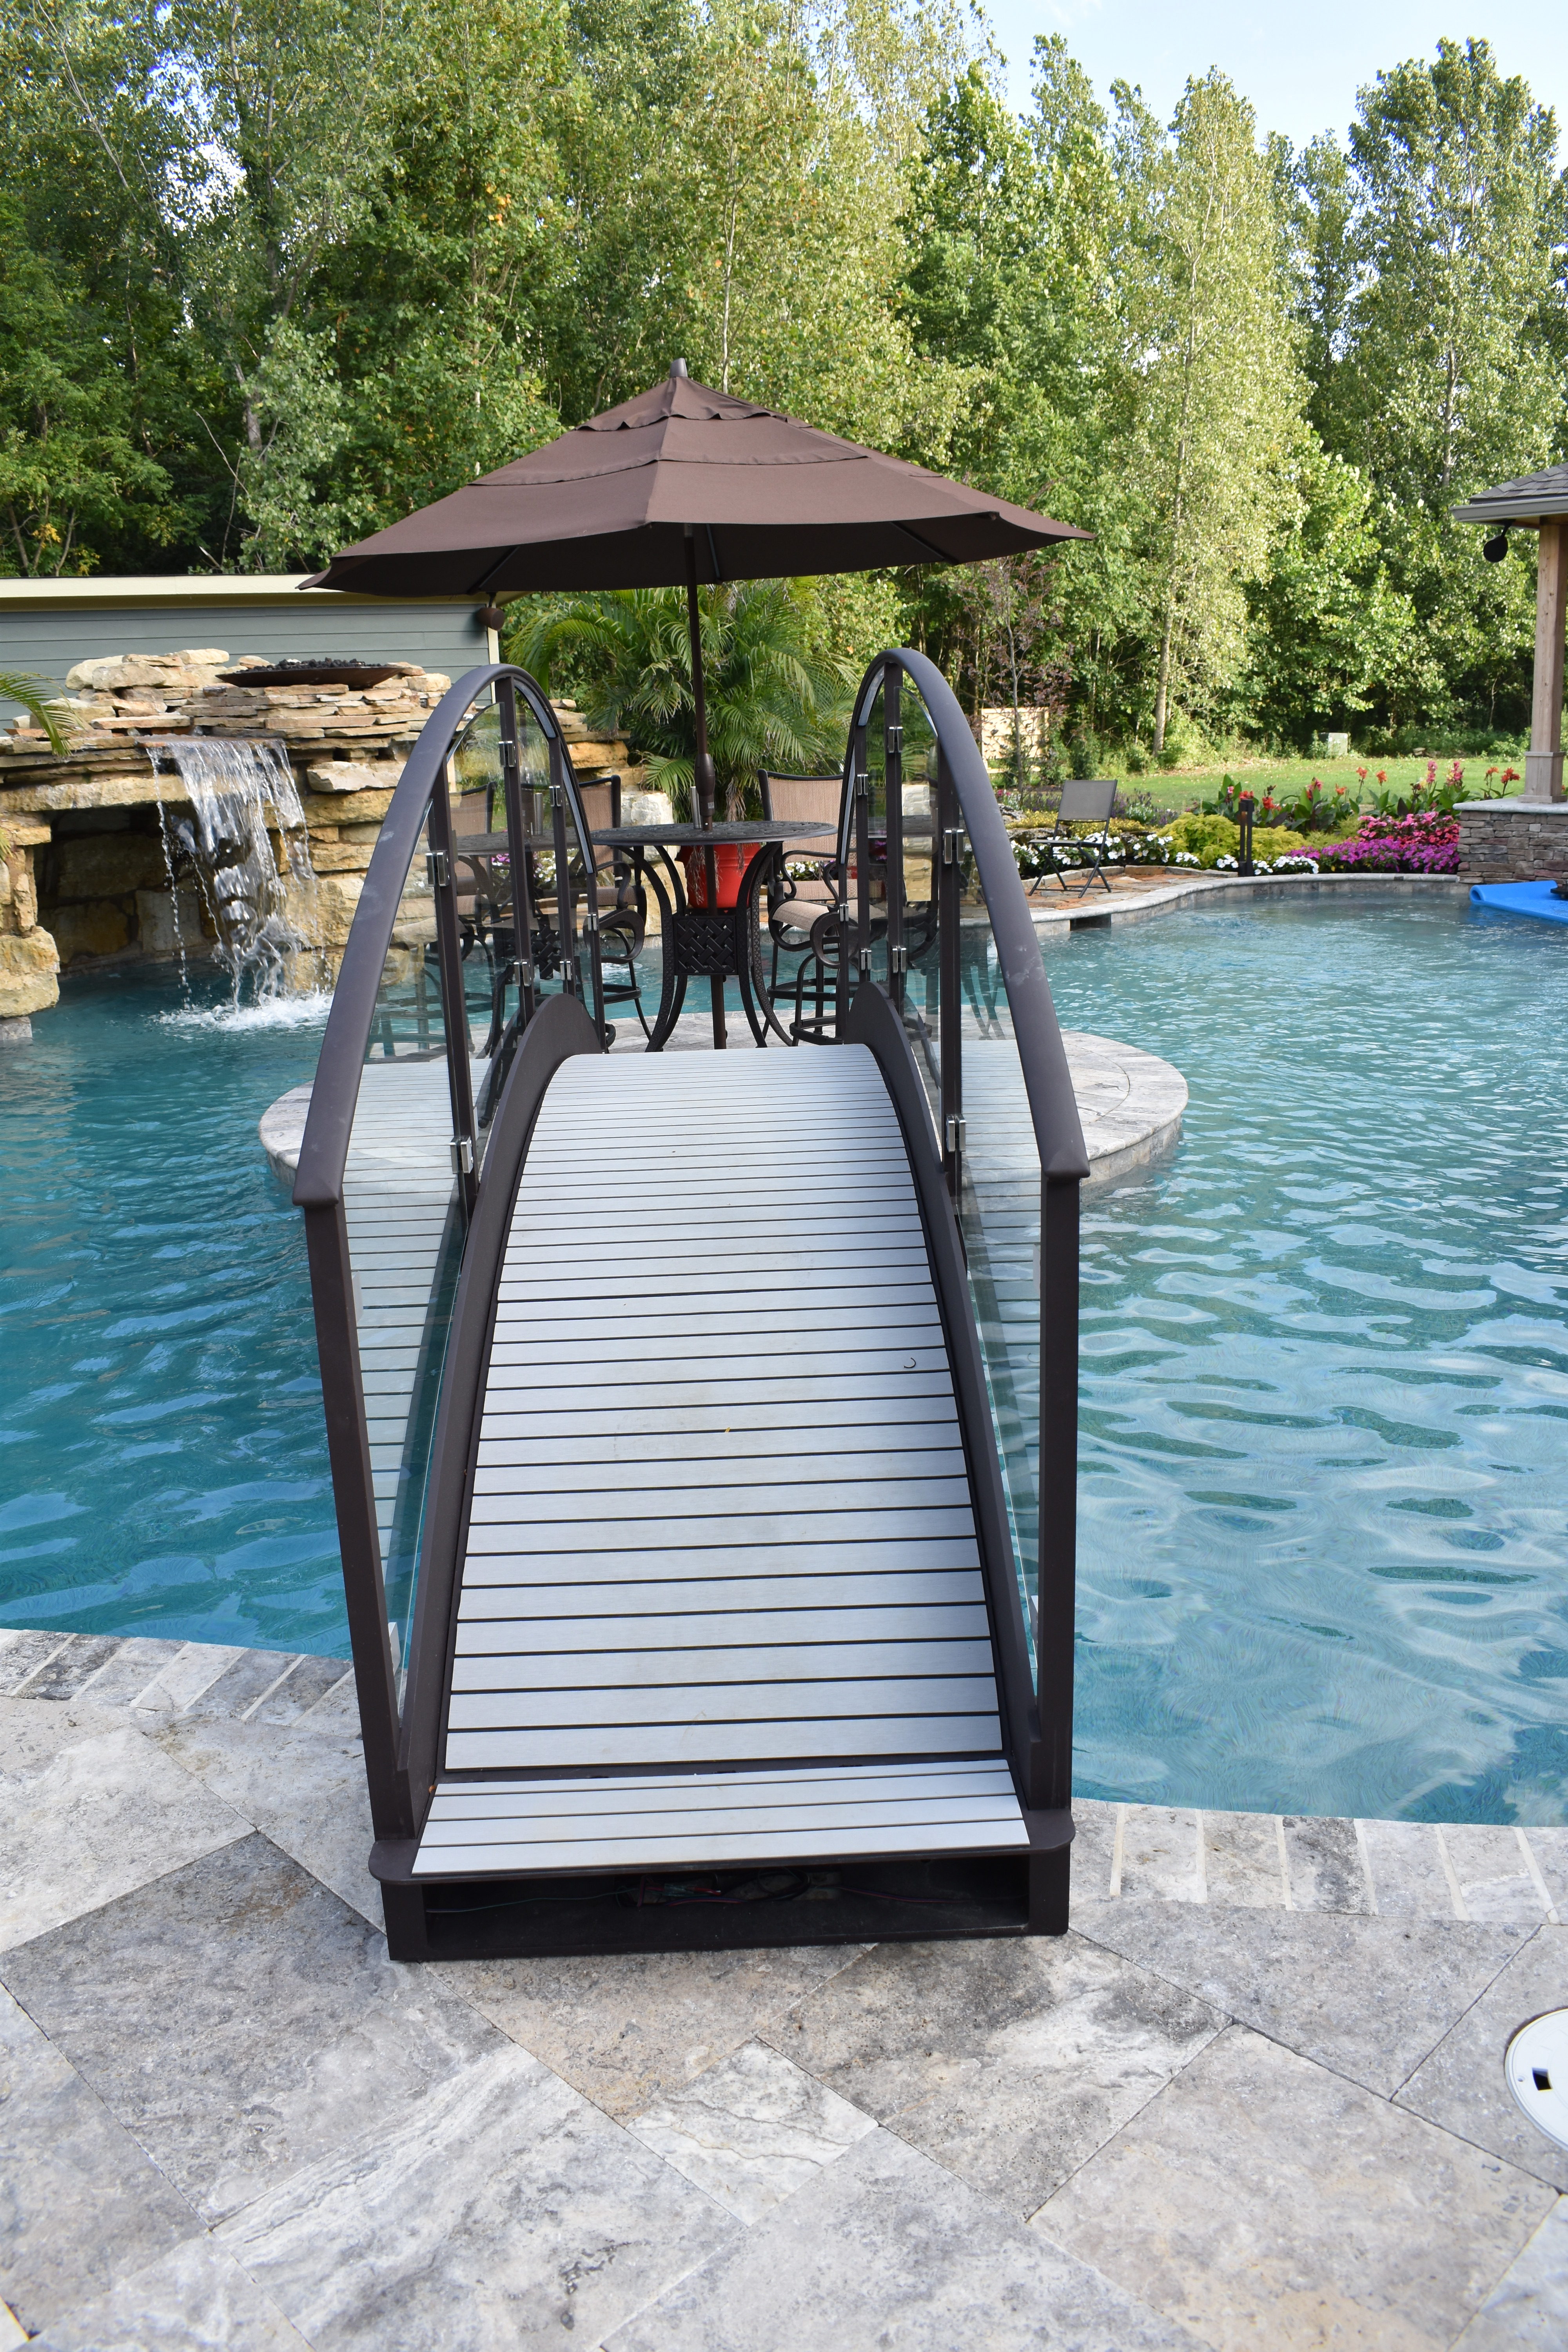 We specialize in making custom pool bridges too!